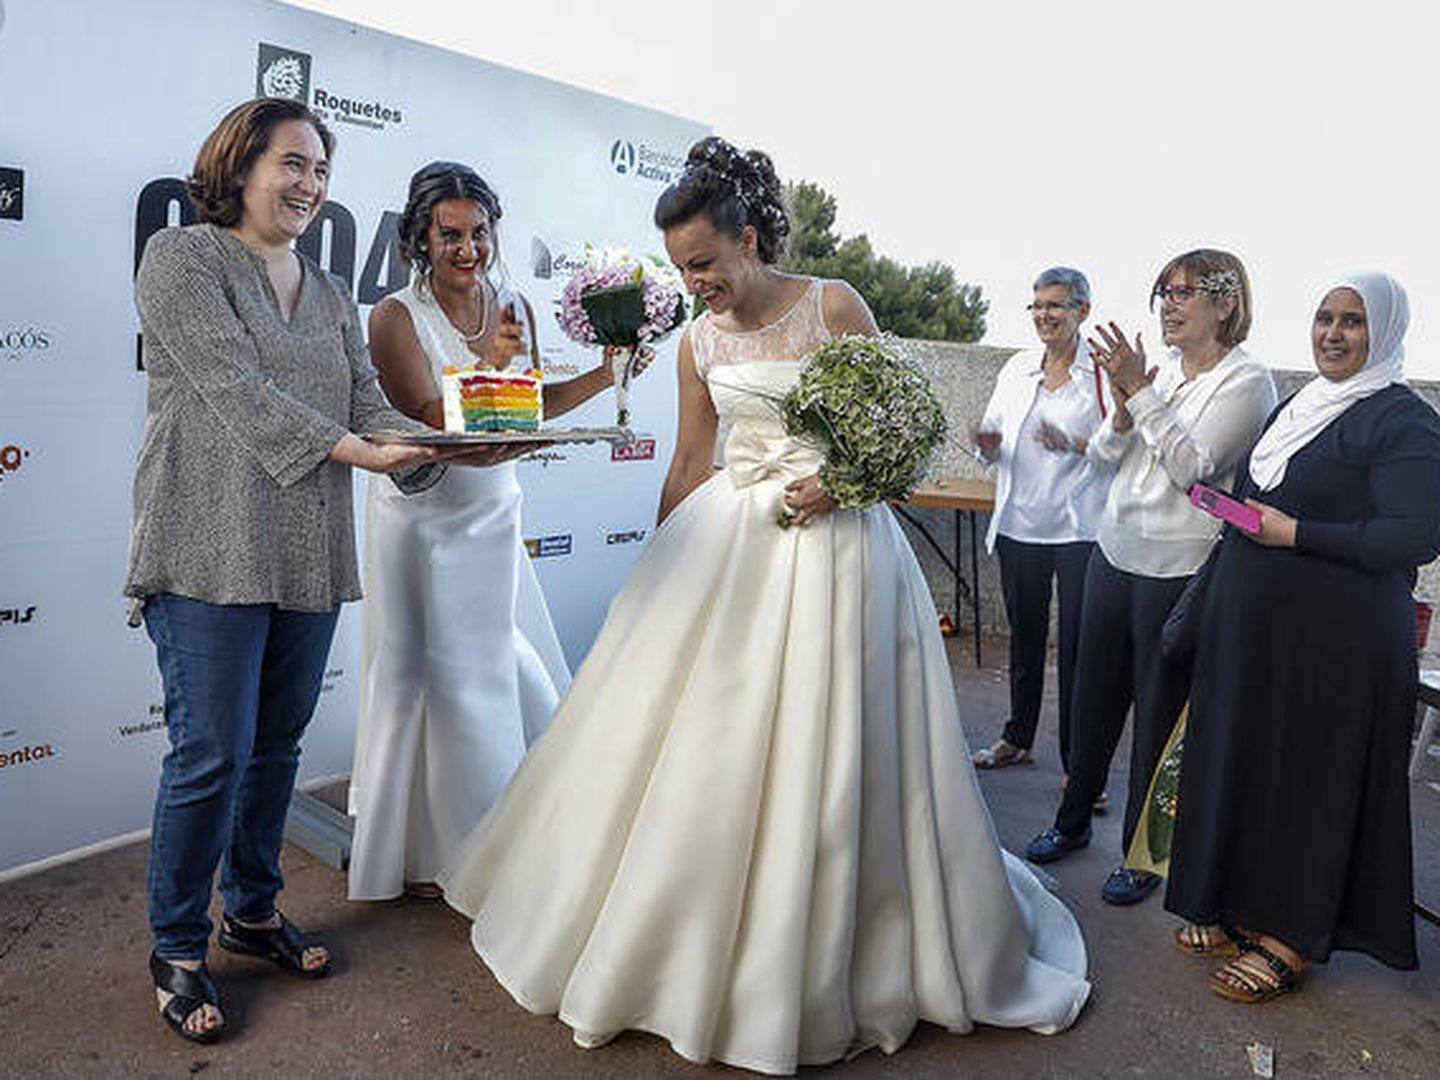 La alcaldesa de Barcelona, Ada Colau, en la boda de una pareja de mujeres. (Ajuntament de Barcelona)